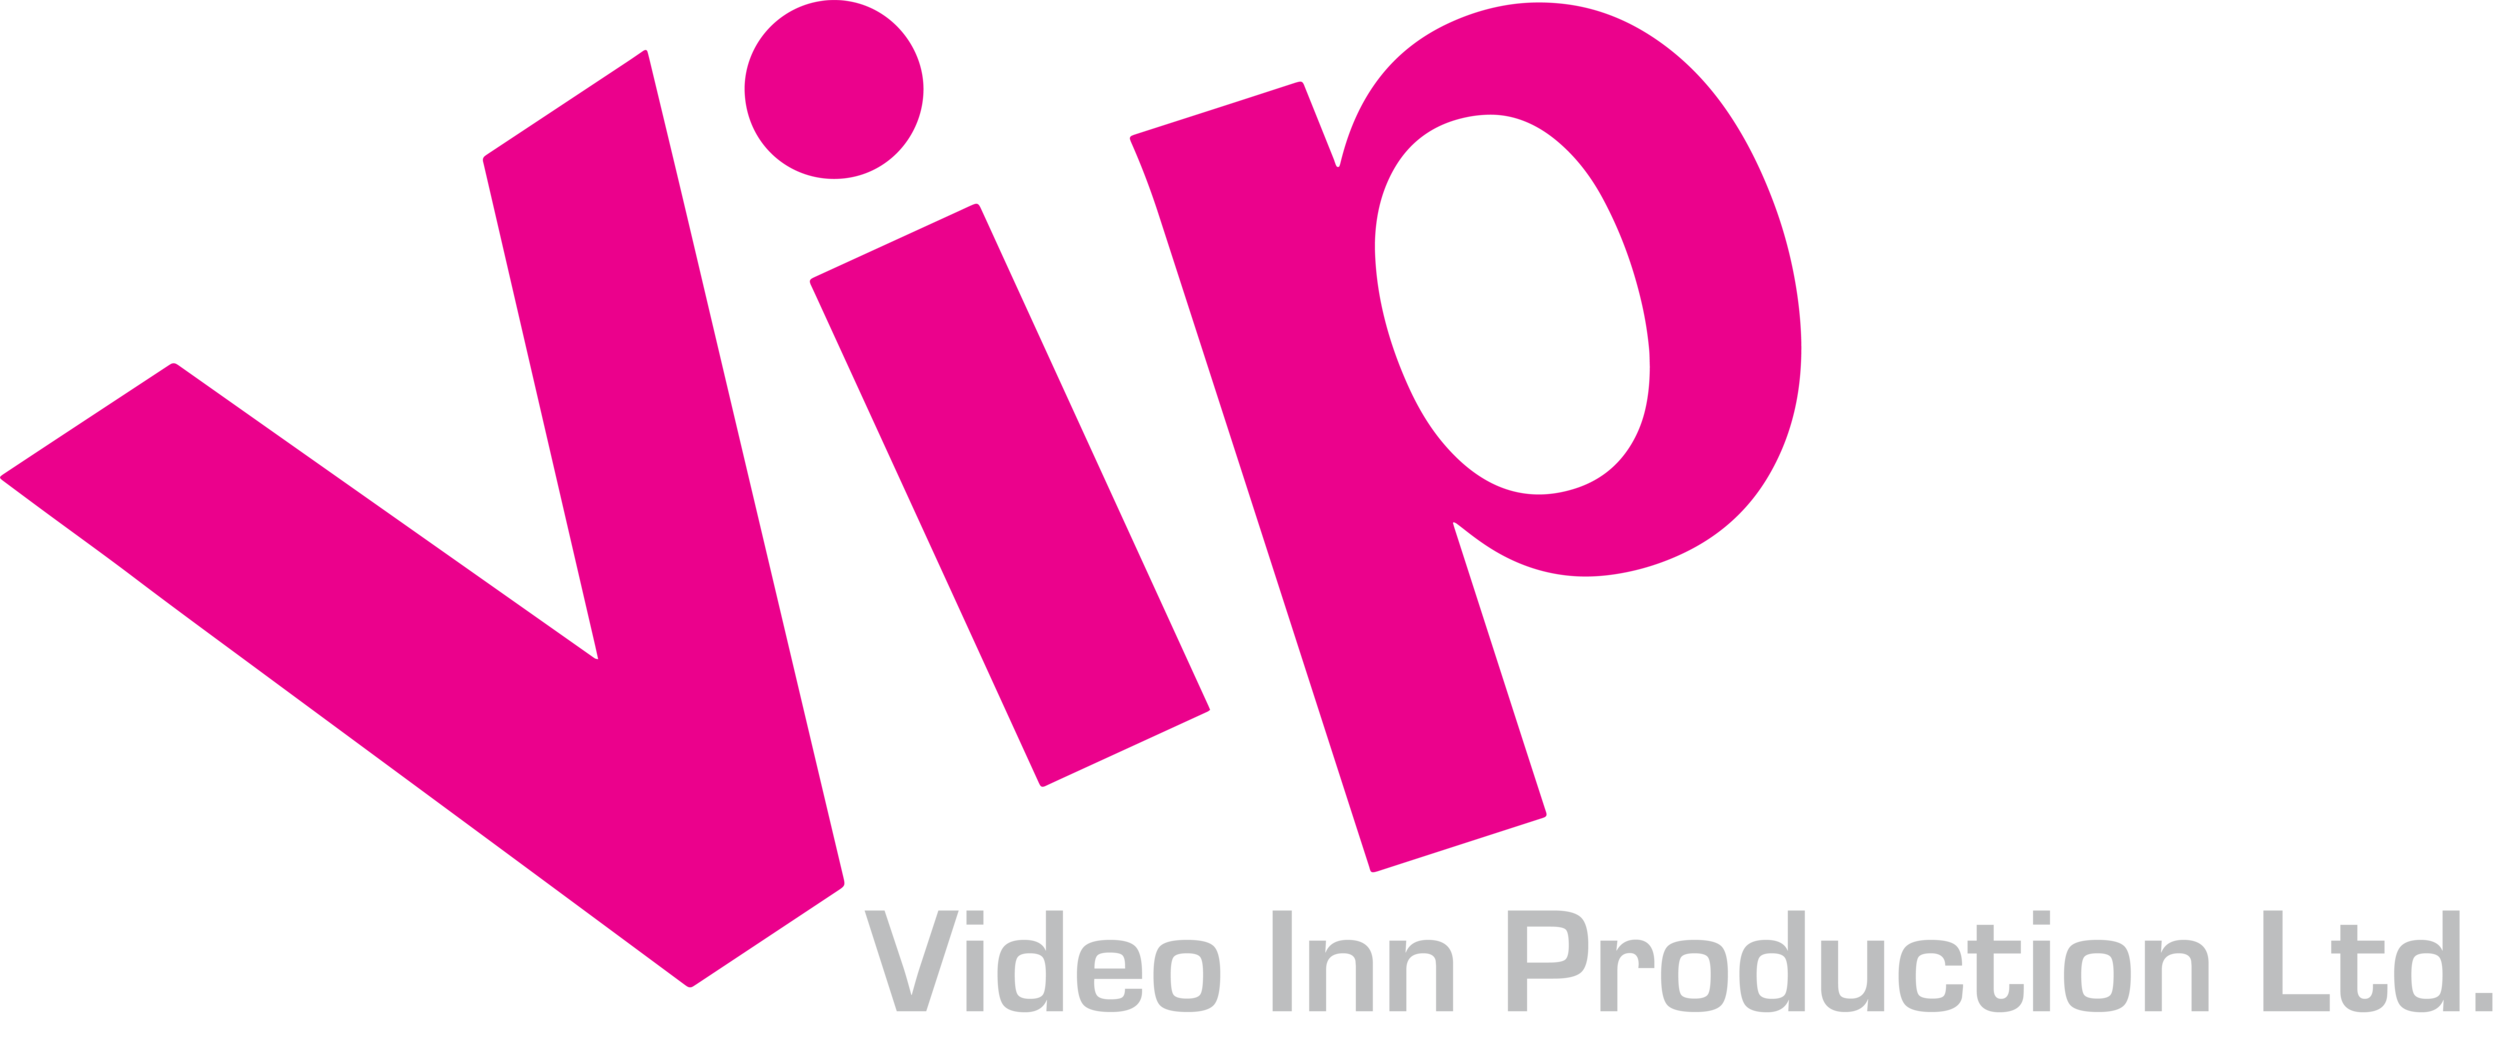 Video Inn Production